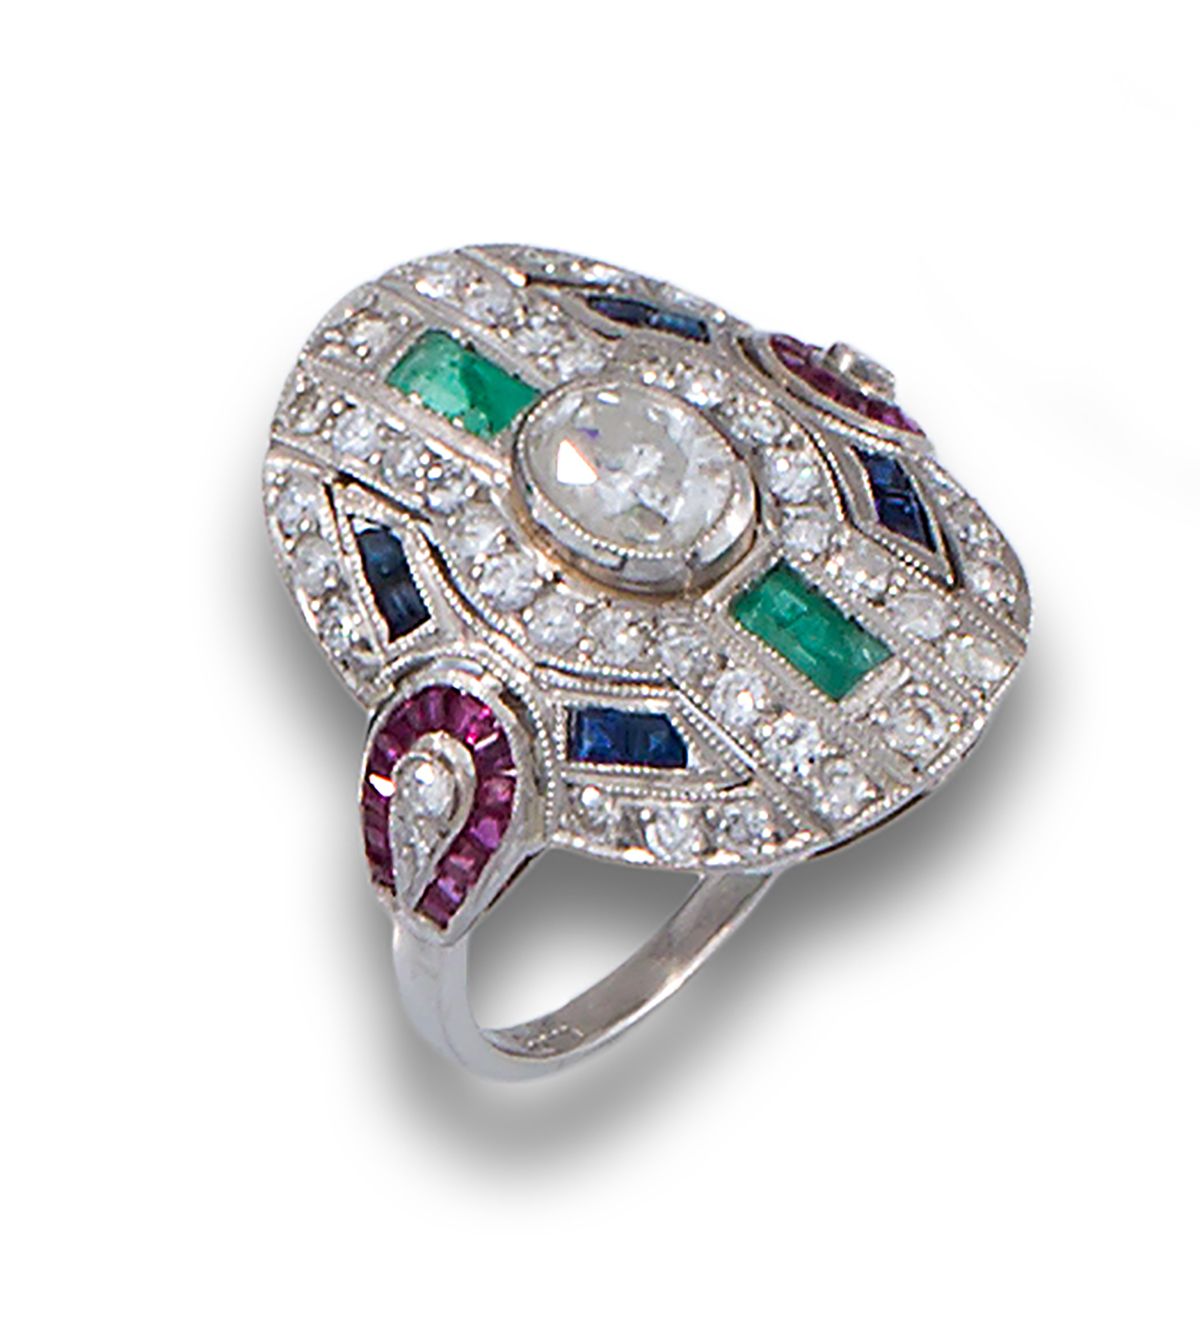 PLATINUM PLATED SHUTTLE RING WITH EMERALD DIAMONDS 装饰艺术风格的穿梭戒指 铂金chaton中心，镶有钻石、老&hellip;